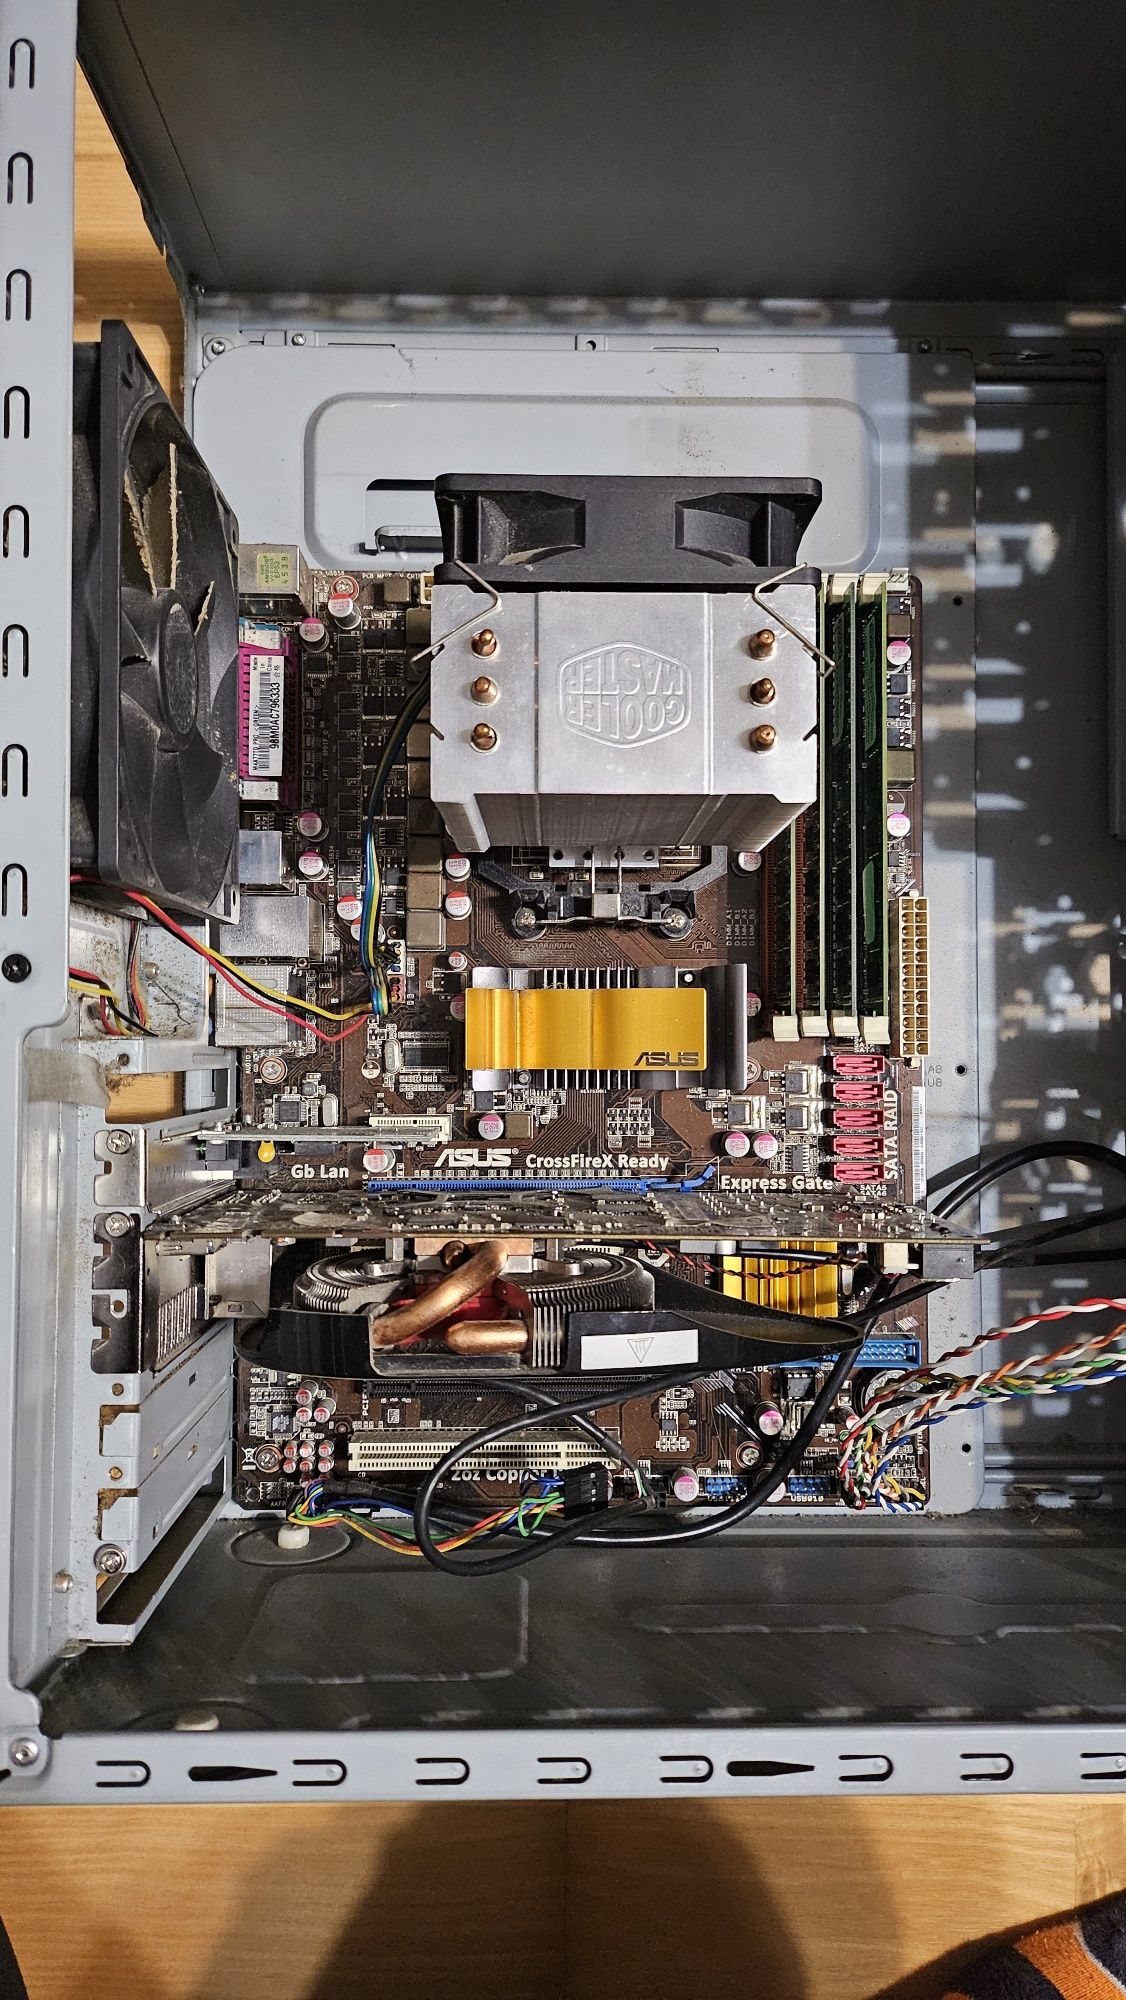 Komputer AMD x4 620, Radeon HD5770, GoodRam DDR3 8gb, crosair TX650